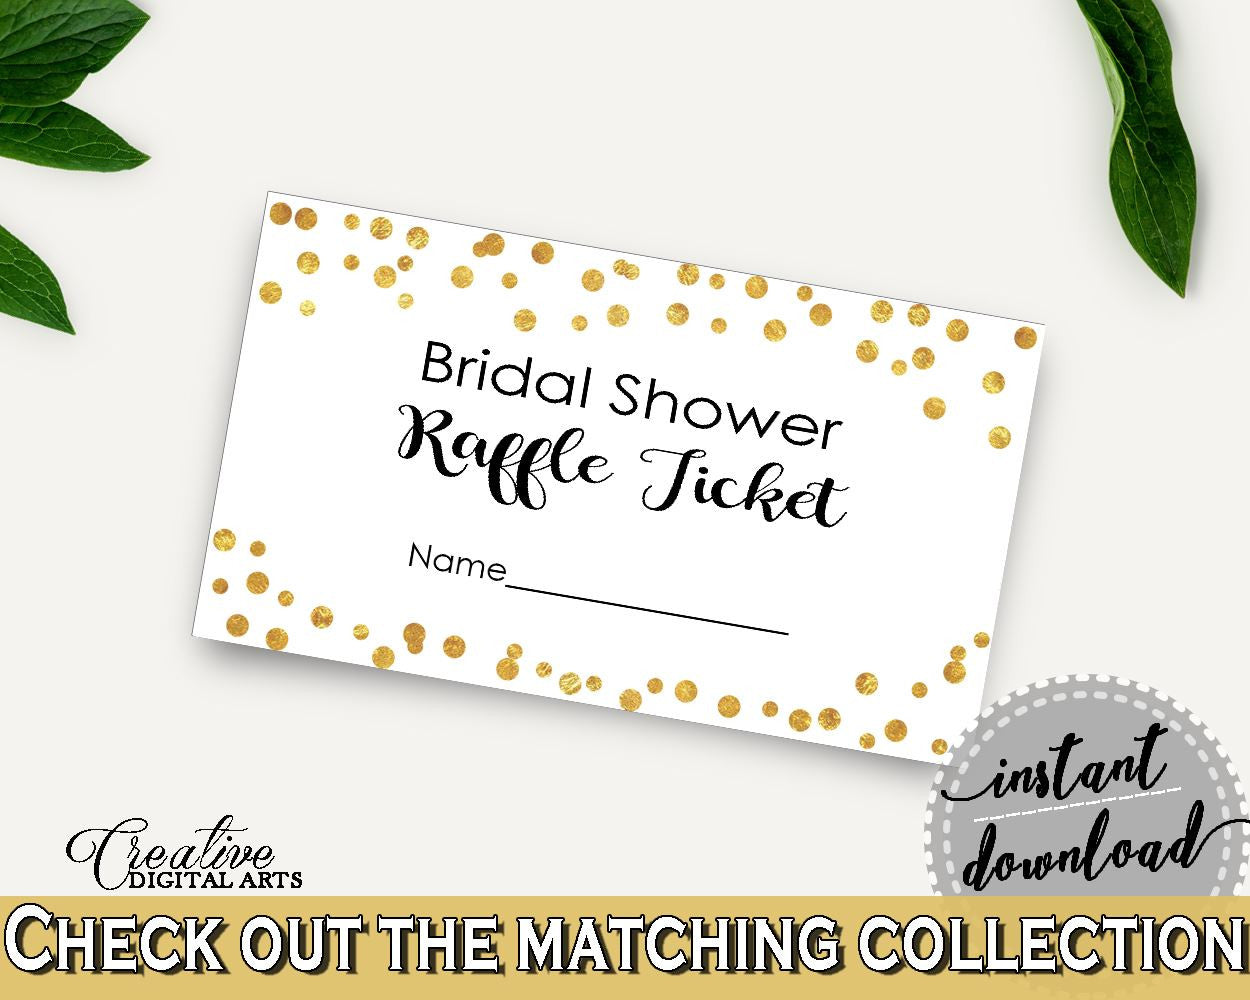 Raffle Ticket Bridal Shower Raffle Ticket Confetti Bridal Shower Raffle Ticket Bridal Shower Confetti Raffle Ticket Gold White party CZXE5 - Digital Product